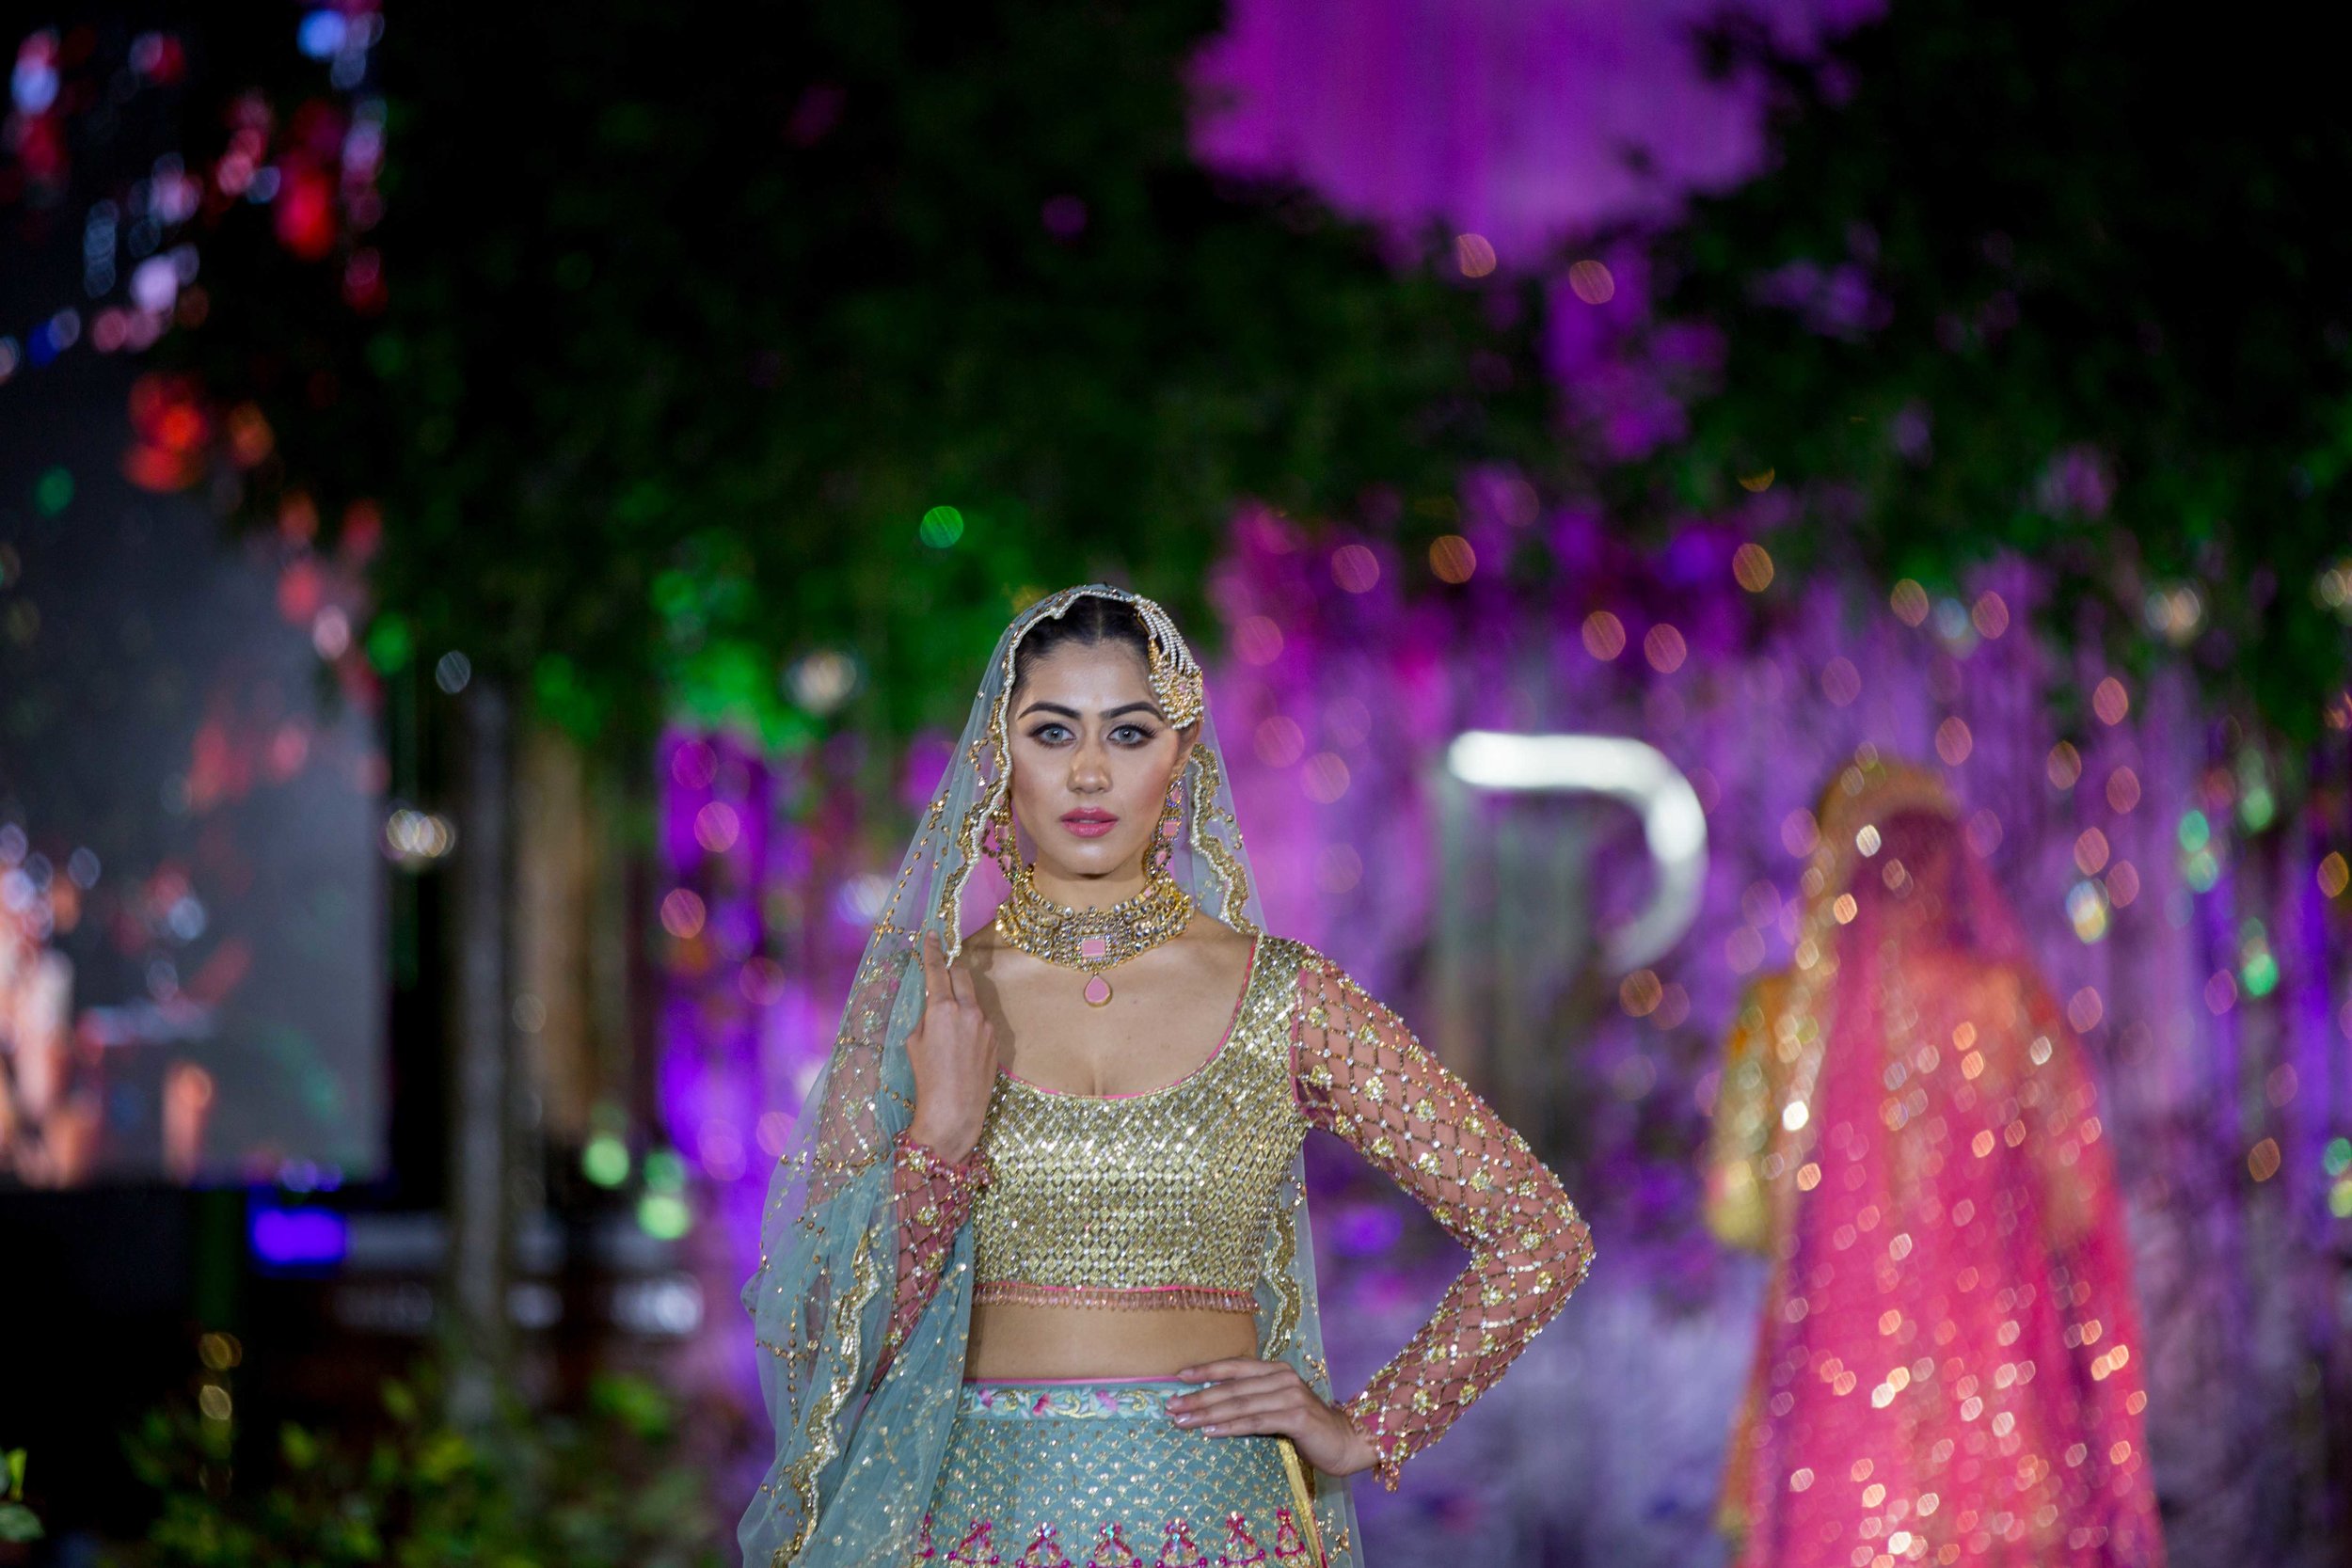 IPLF-IPL-Indian-Pakistani-London-Fashion-London-Week-catwalk-photographer-natalia-smith-photography-Nomi-Ansari-7.jpg